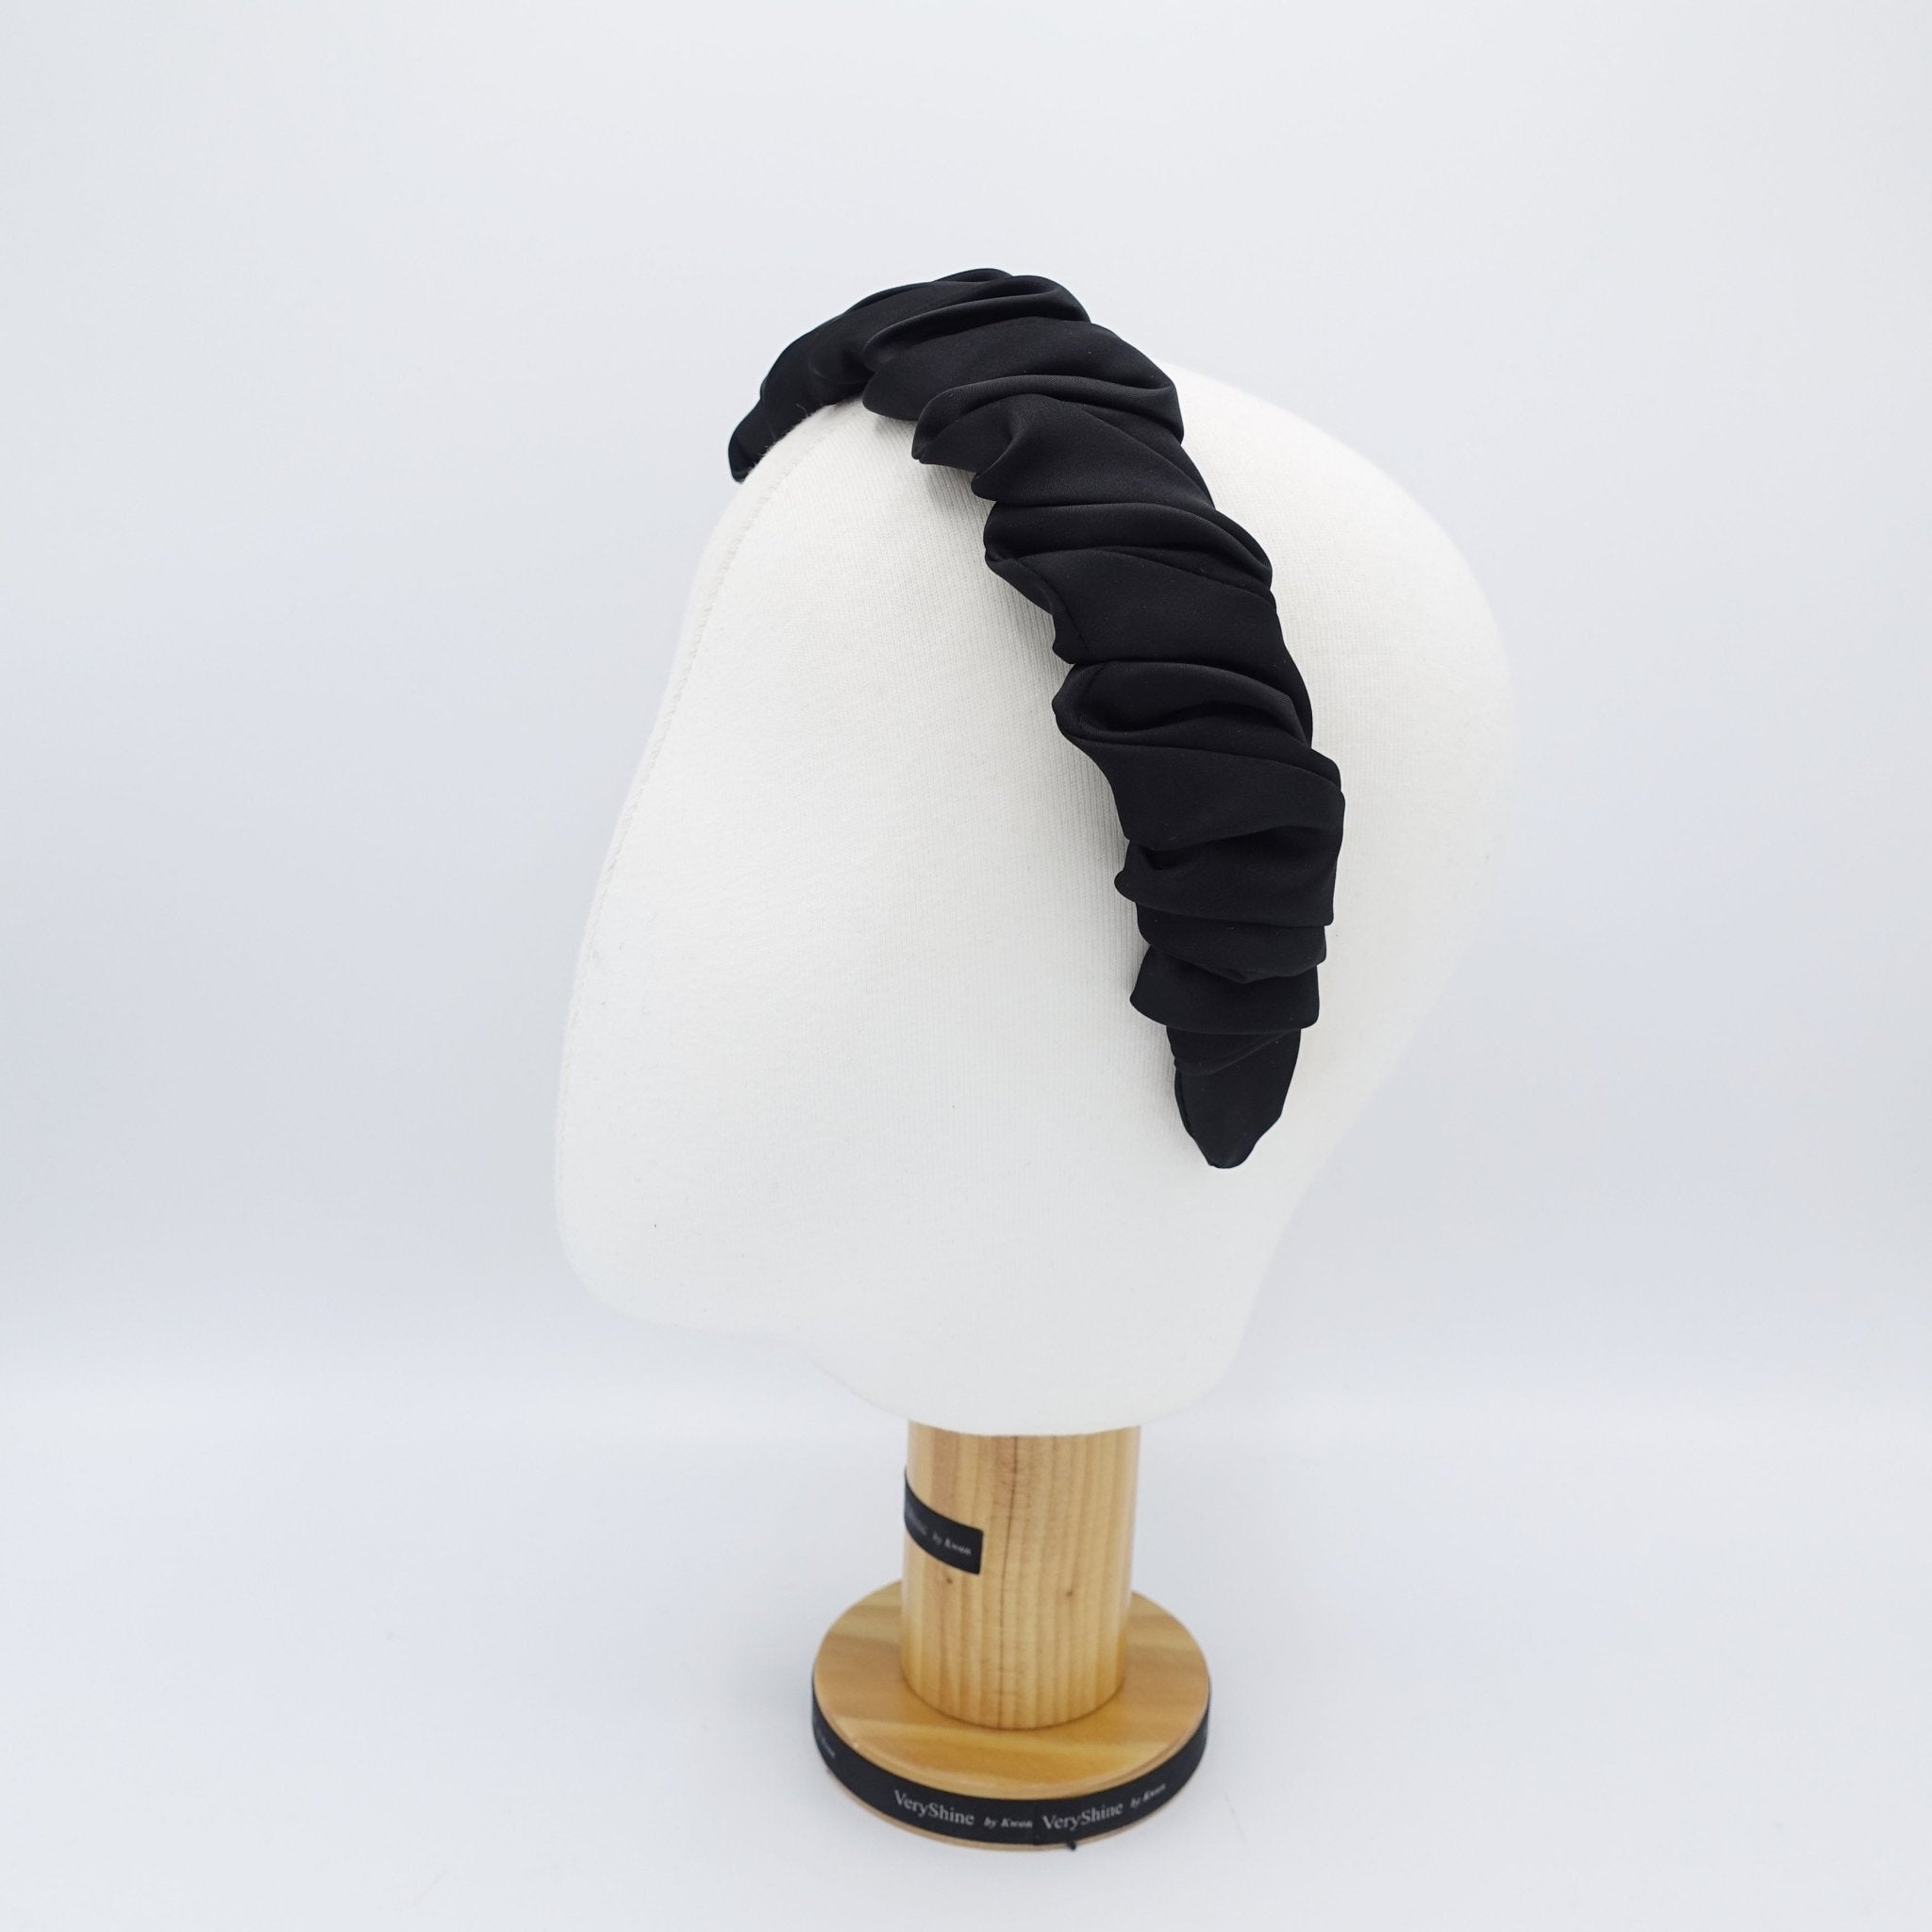 veryshine.com hairband/headband satin spiral wave headband pleated wrap feminine stylish hairband women hair accessory